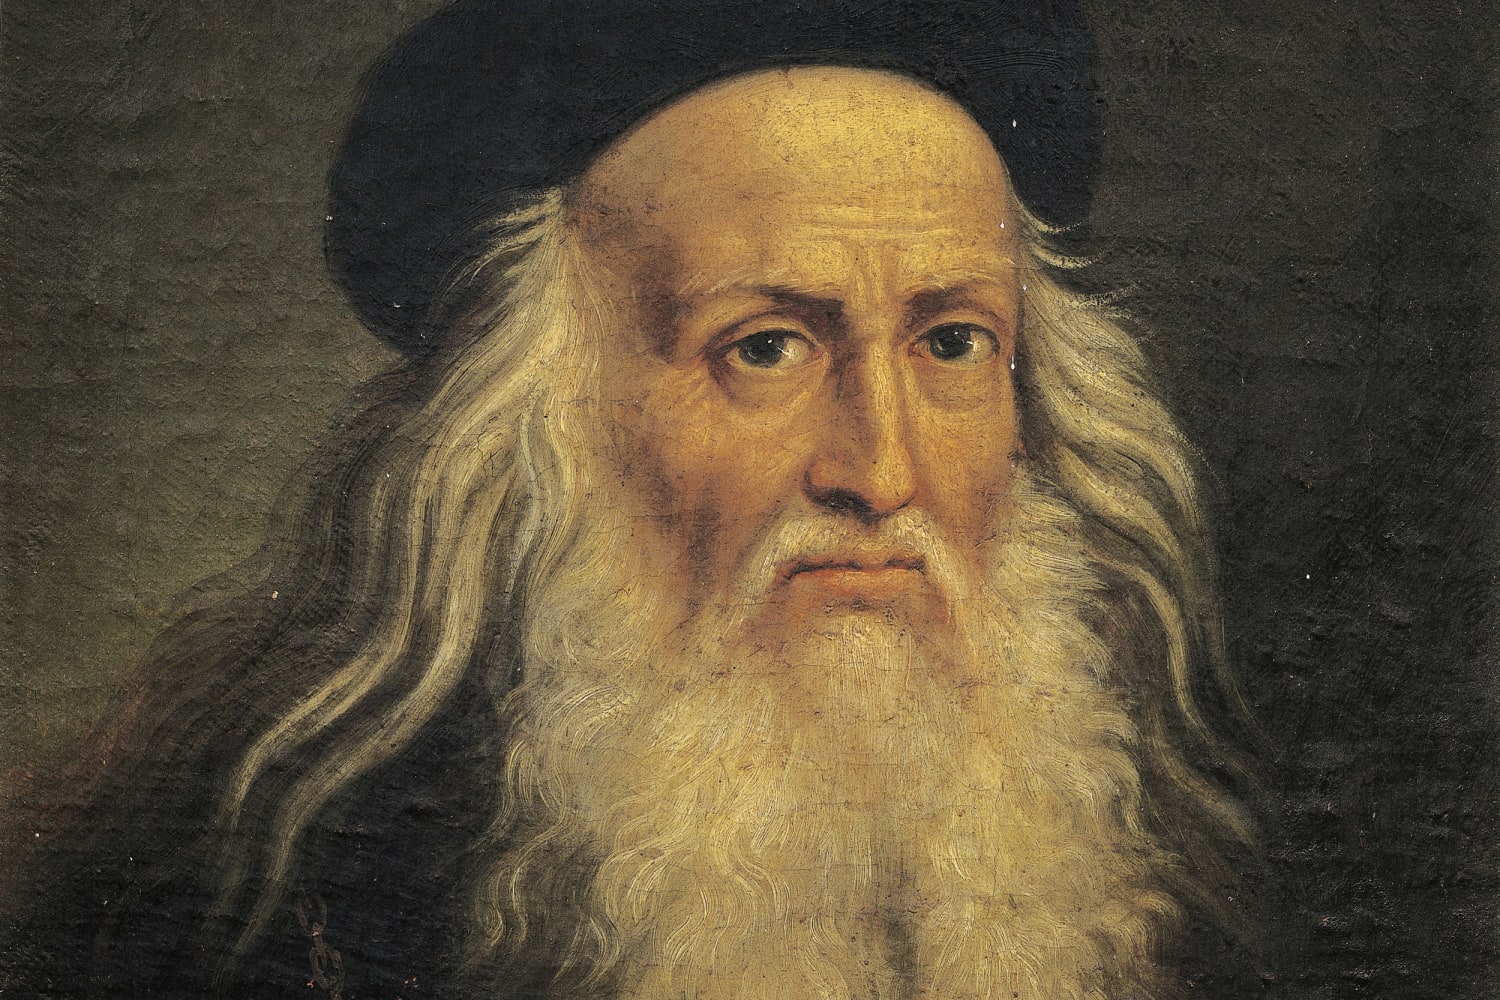 Fourteen living descendants of Leonardo da Vinci are identified